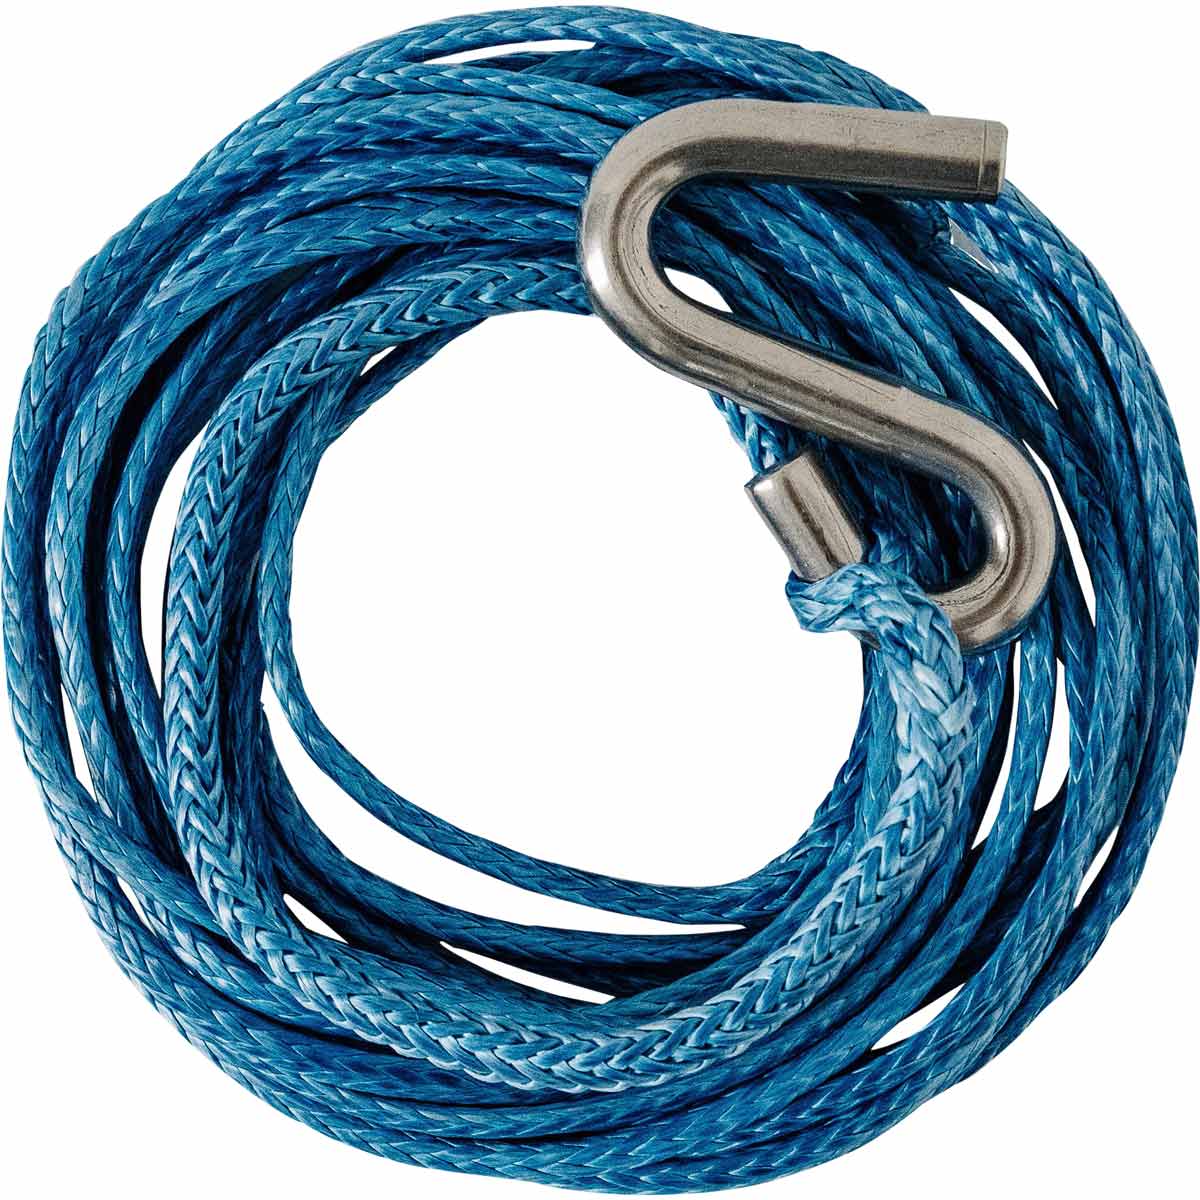 Atlantic S Hook Rope 7m x 6mm